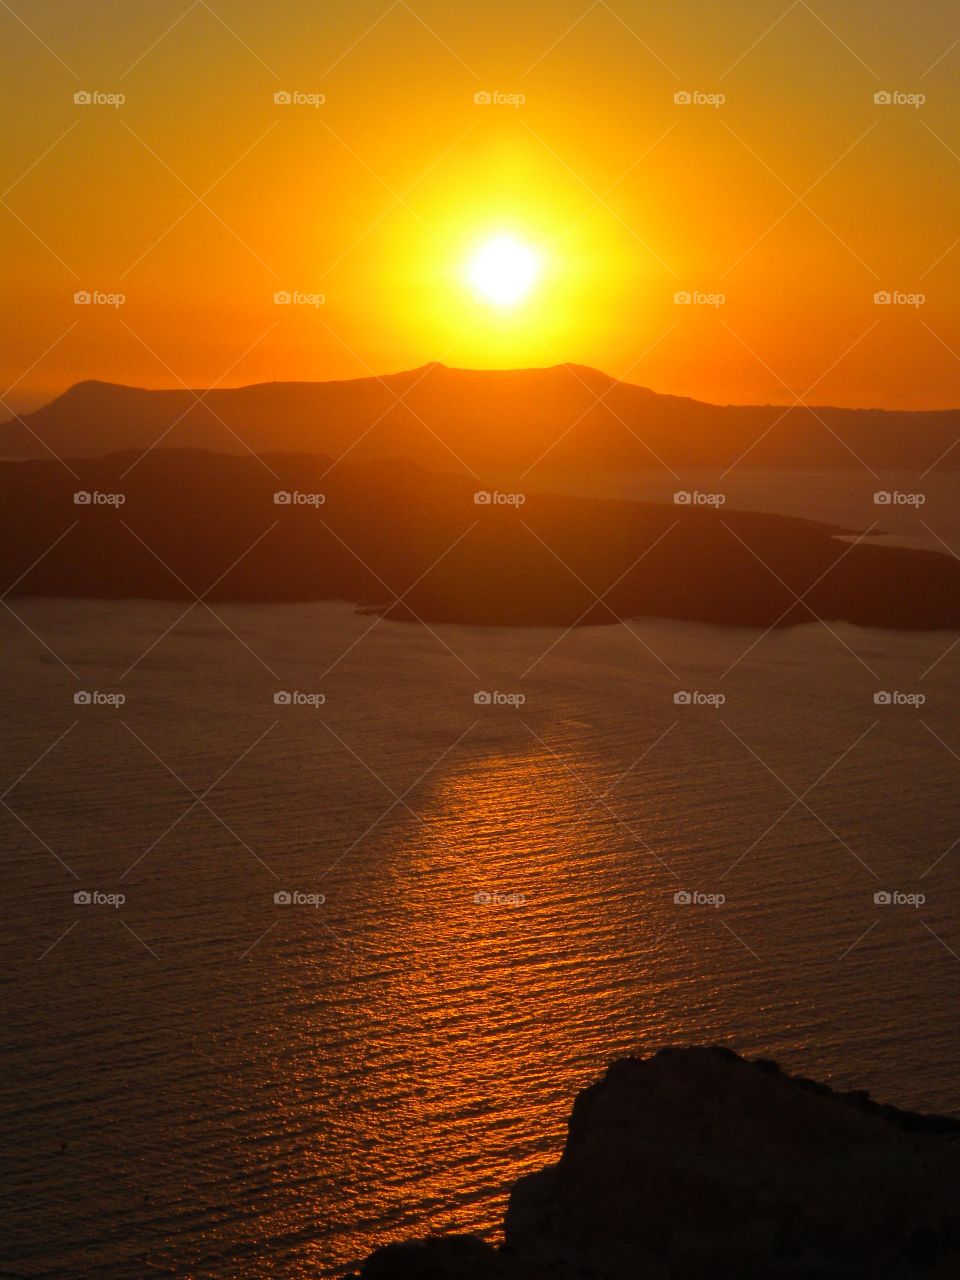 Reflection of sunset at santorini